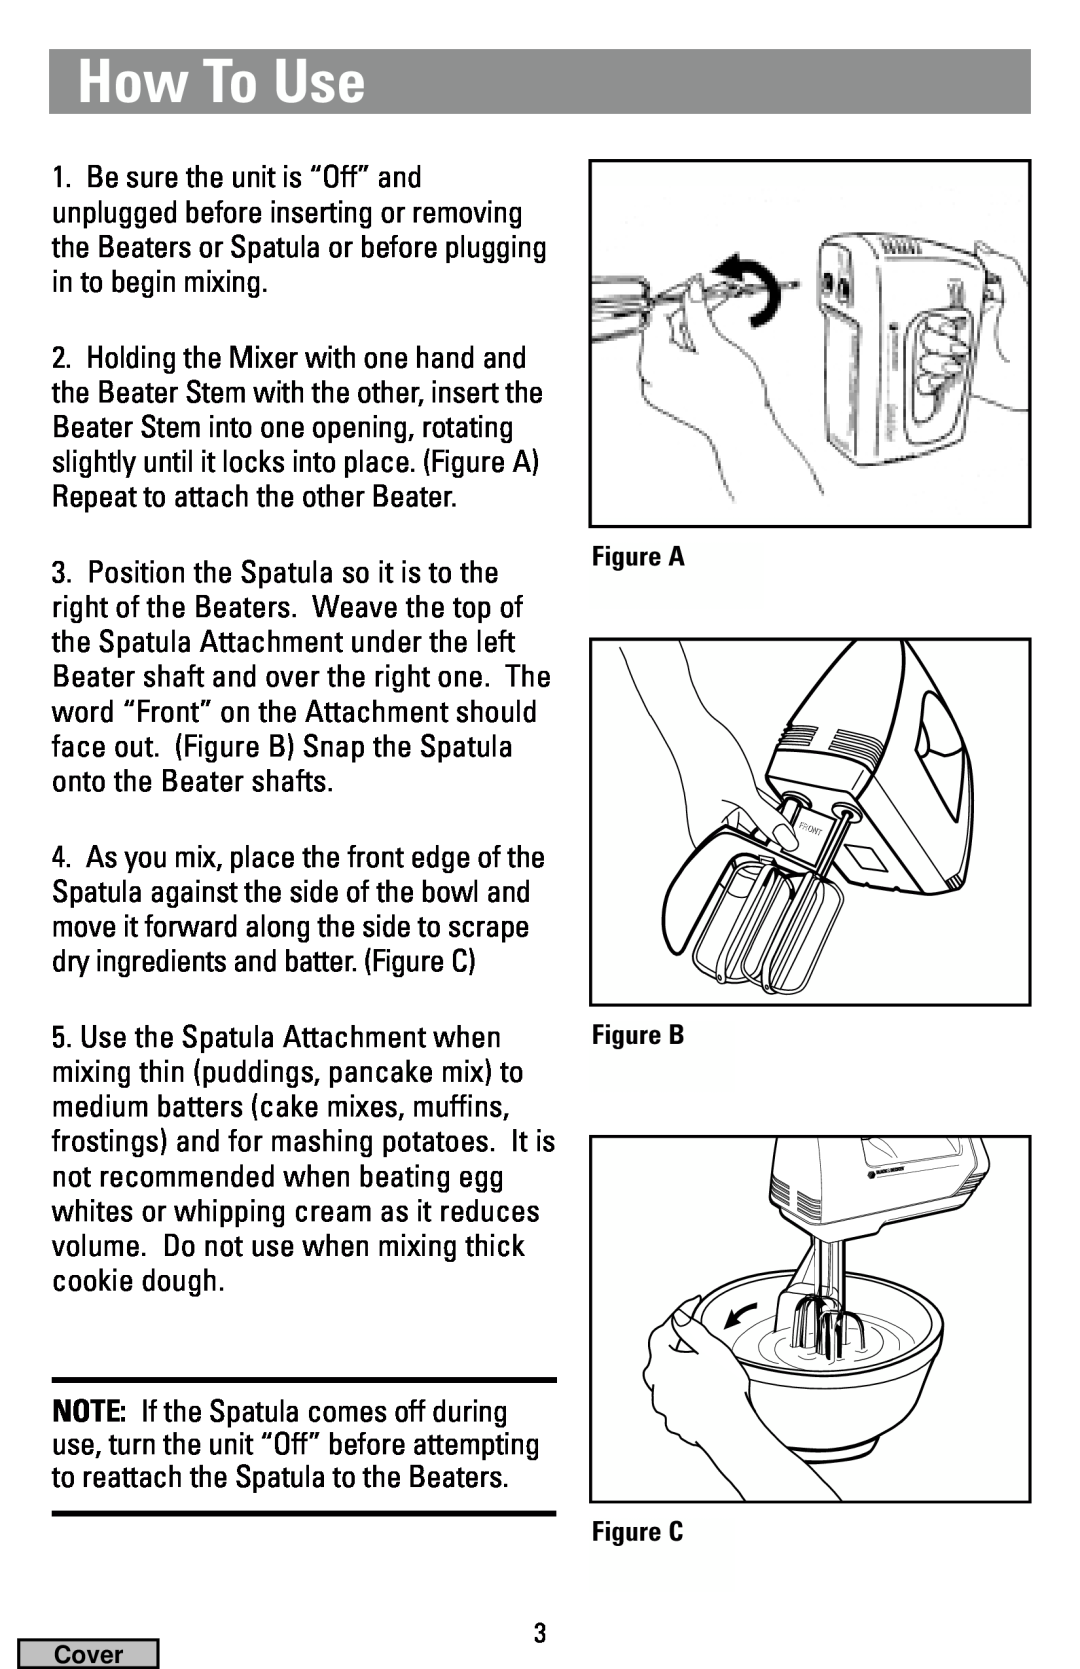 Black & Decker MX40 manual How To Use, Figure A Figure B Figure C 